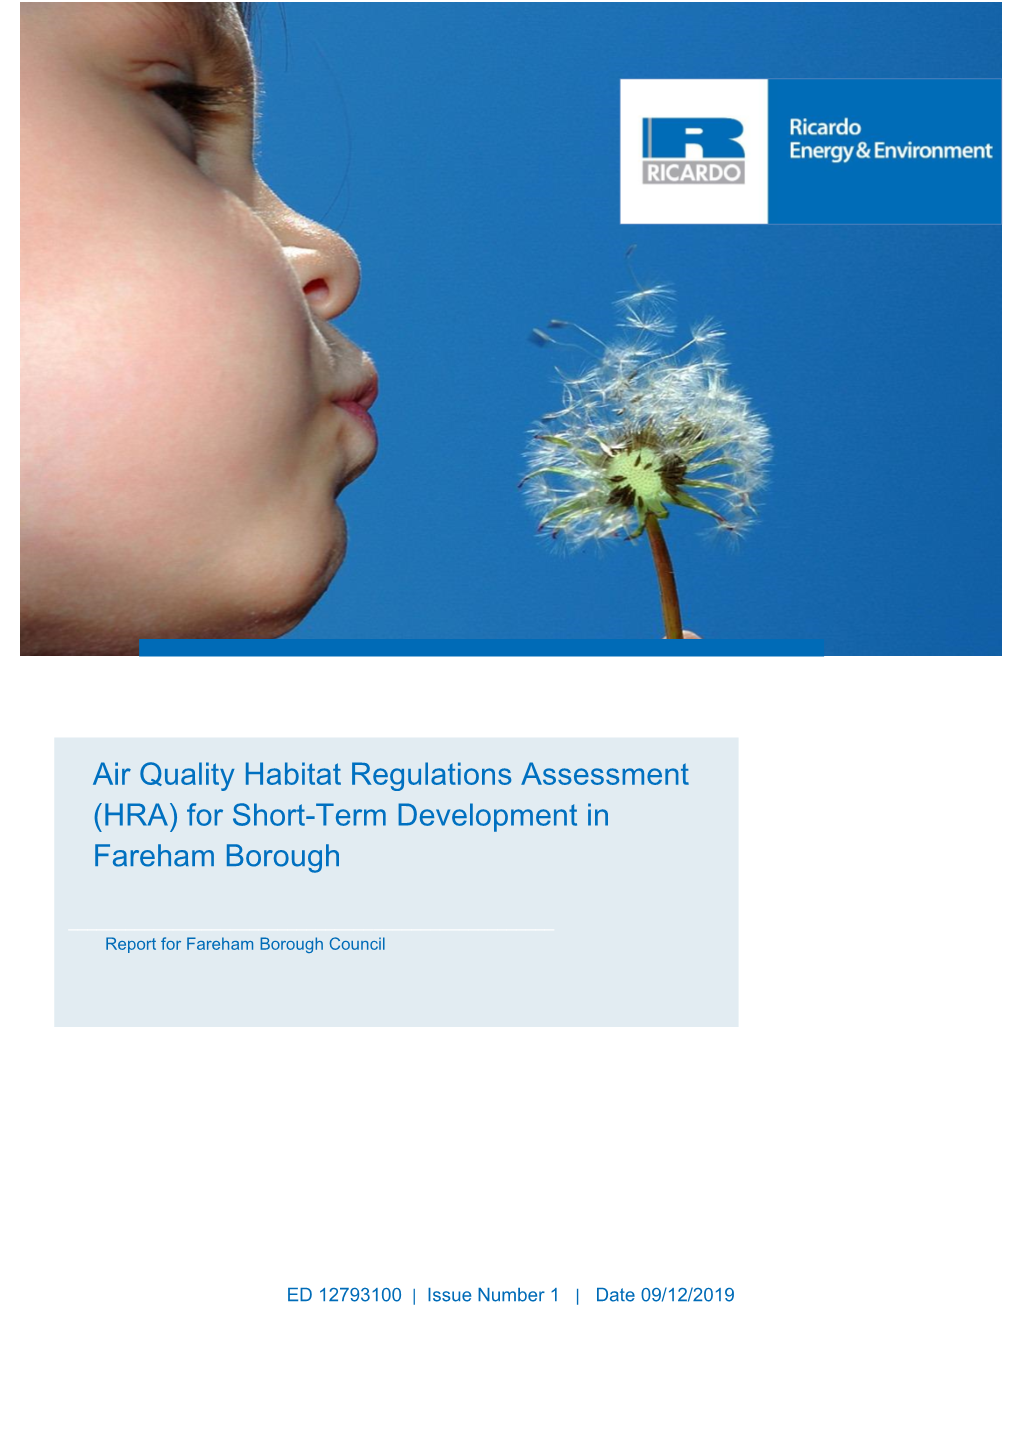 Air Quality Habitat Regulations Assessment (HRA) for Short-Term Development in Fareham Borough